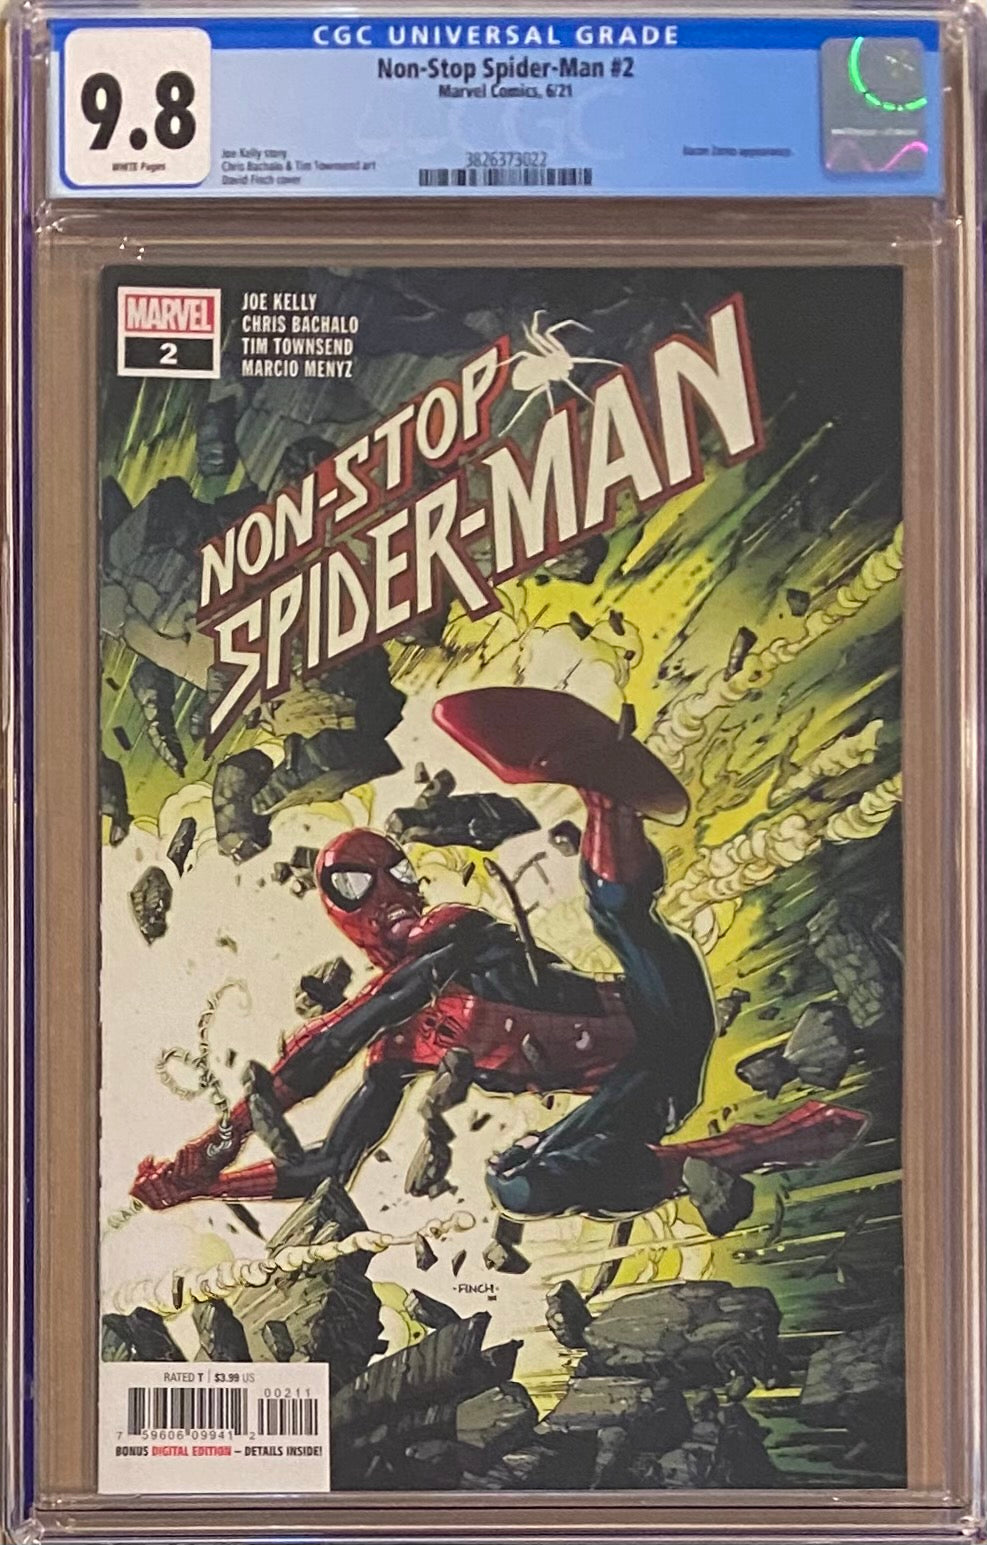 Non-Stop Spider-Man #2 CGC 9.8